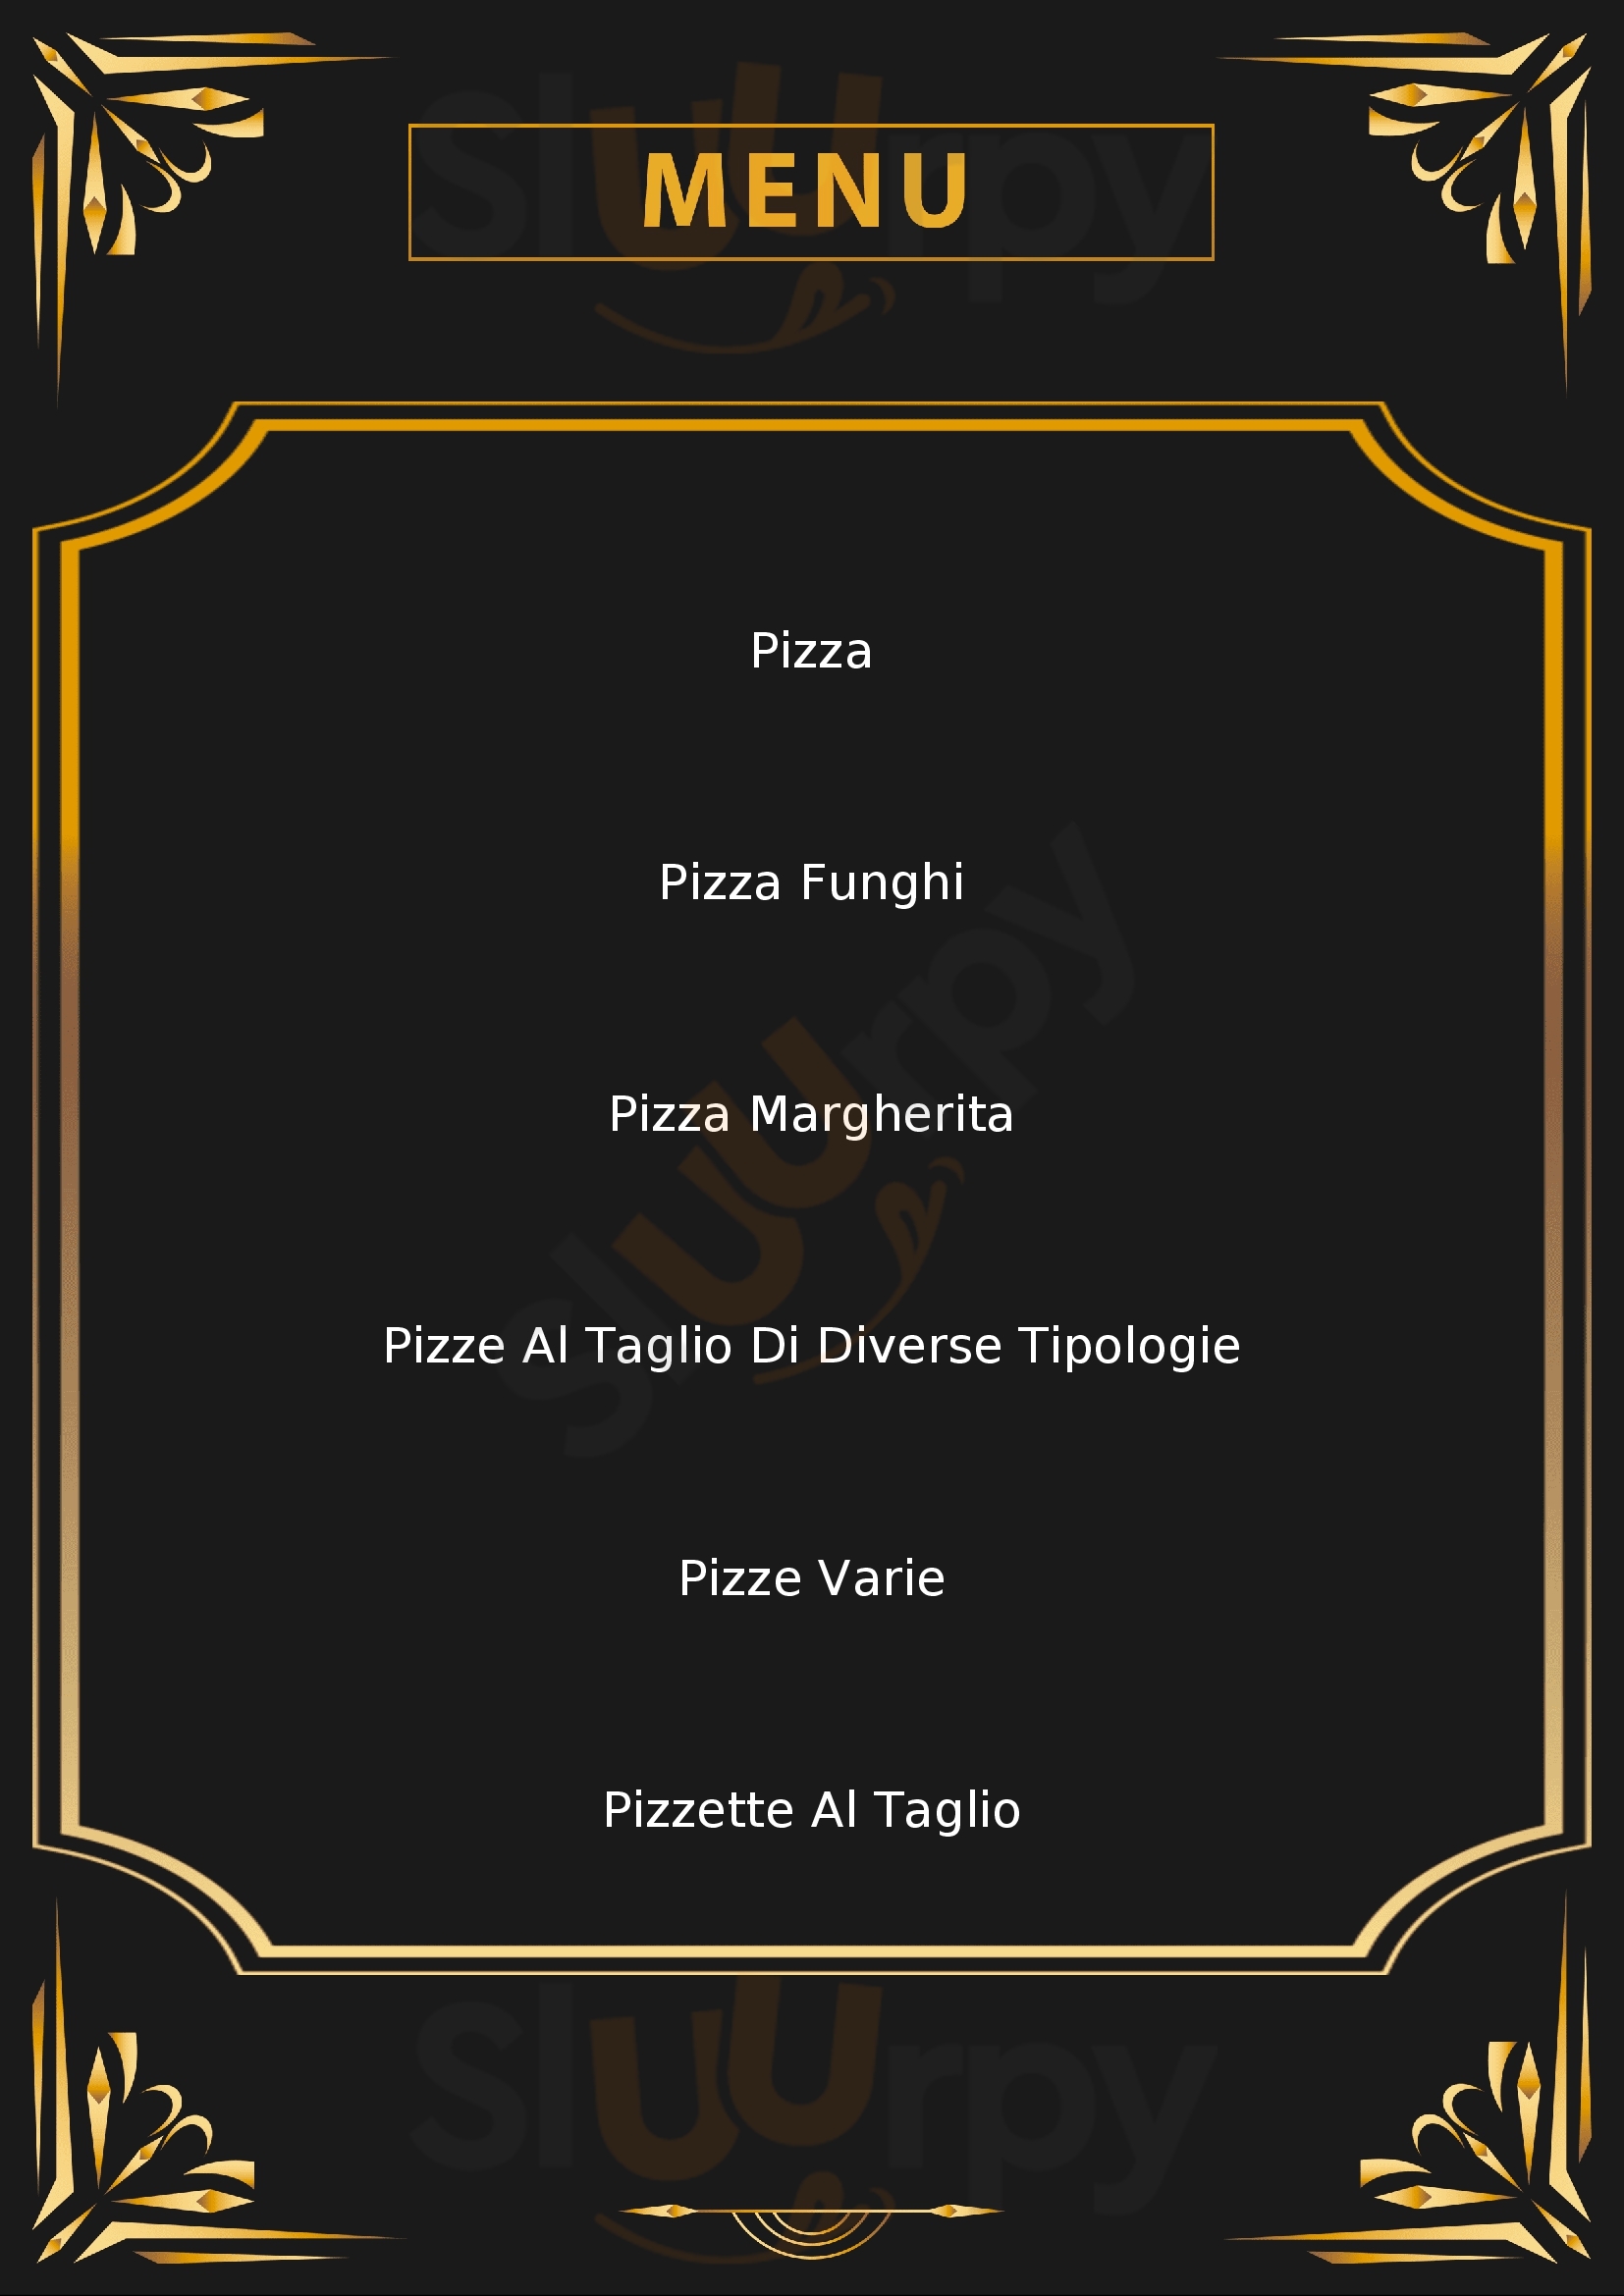 Pizzeria Rustica Gaeta menù 1 pagina